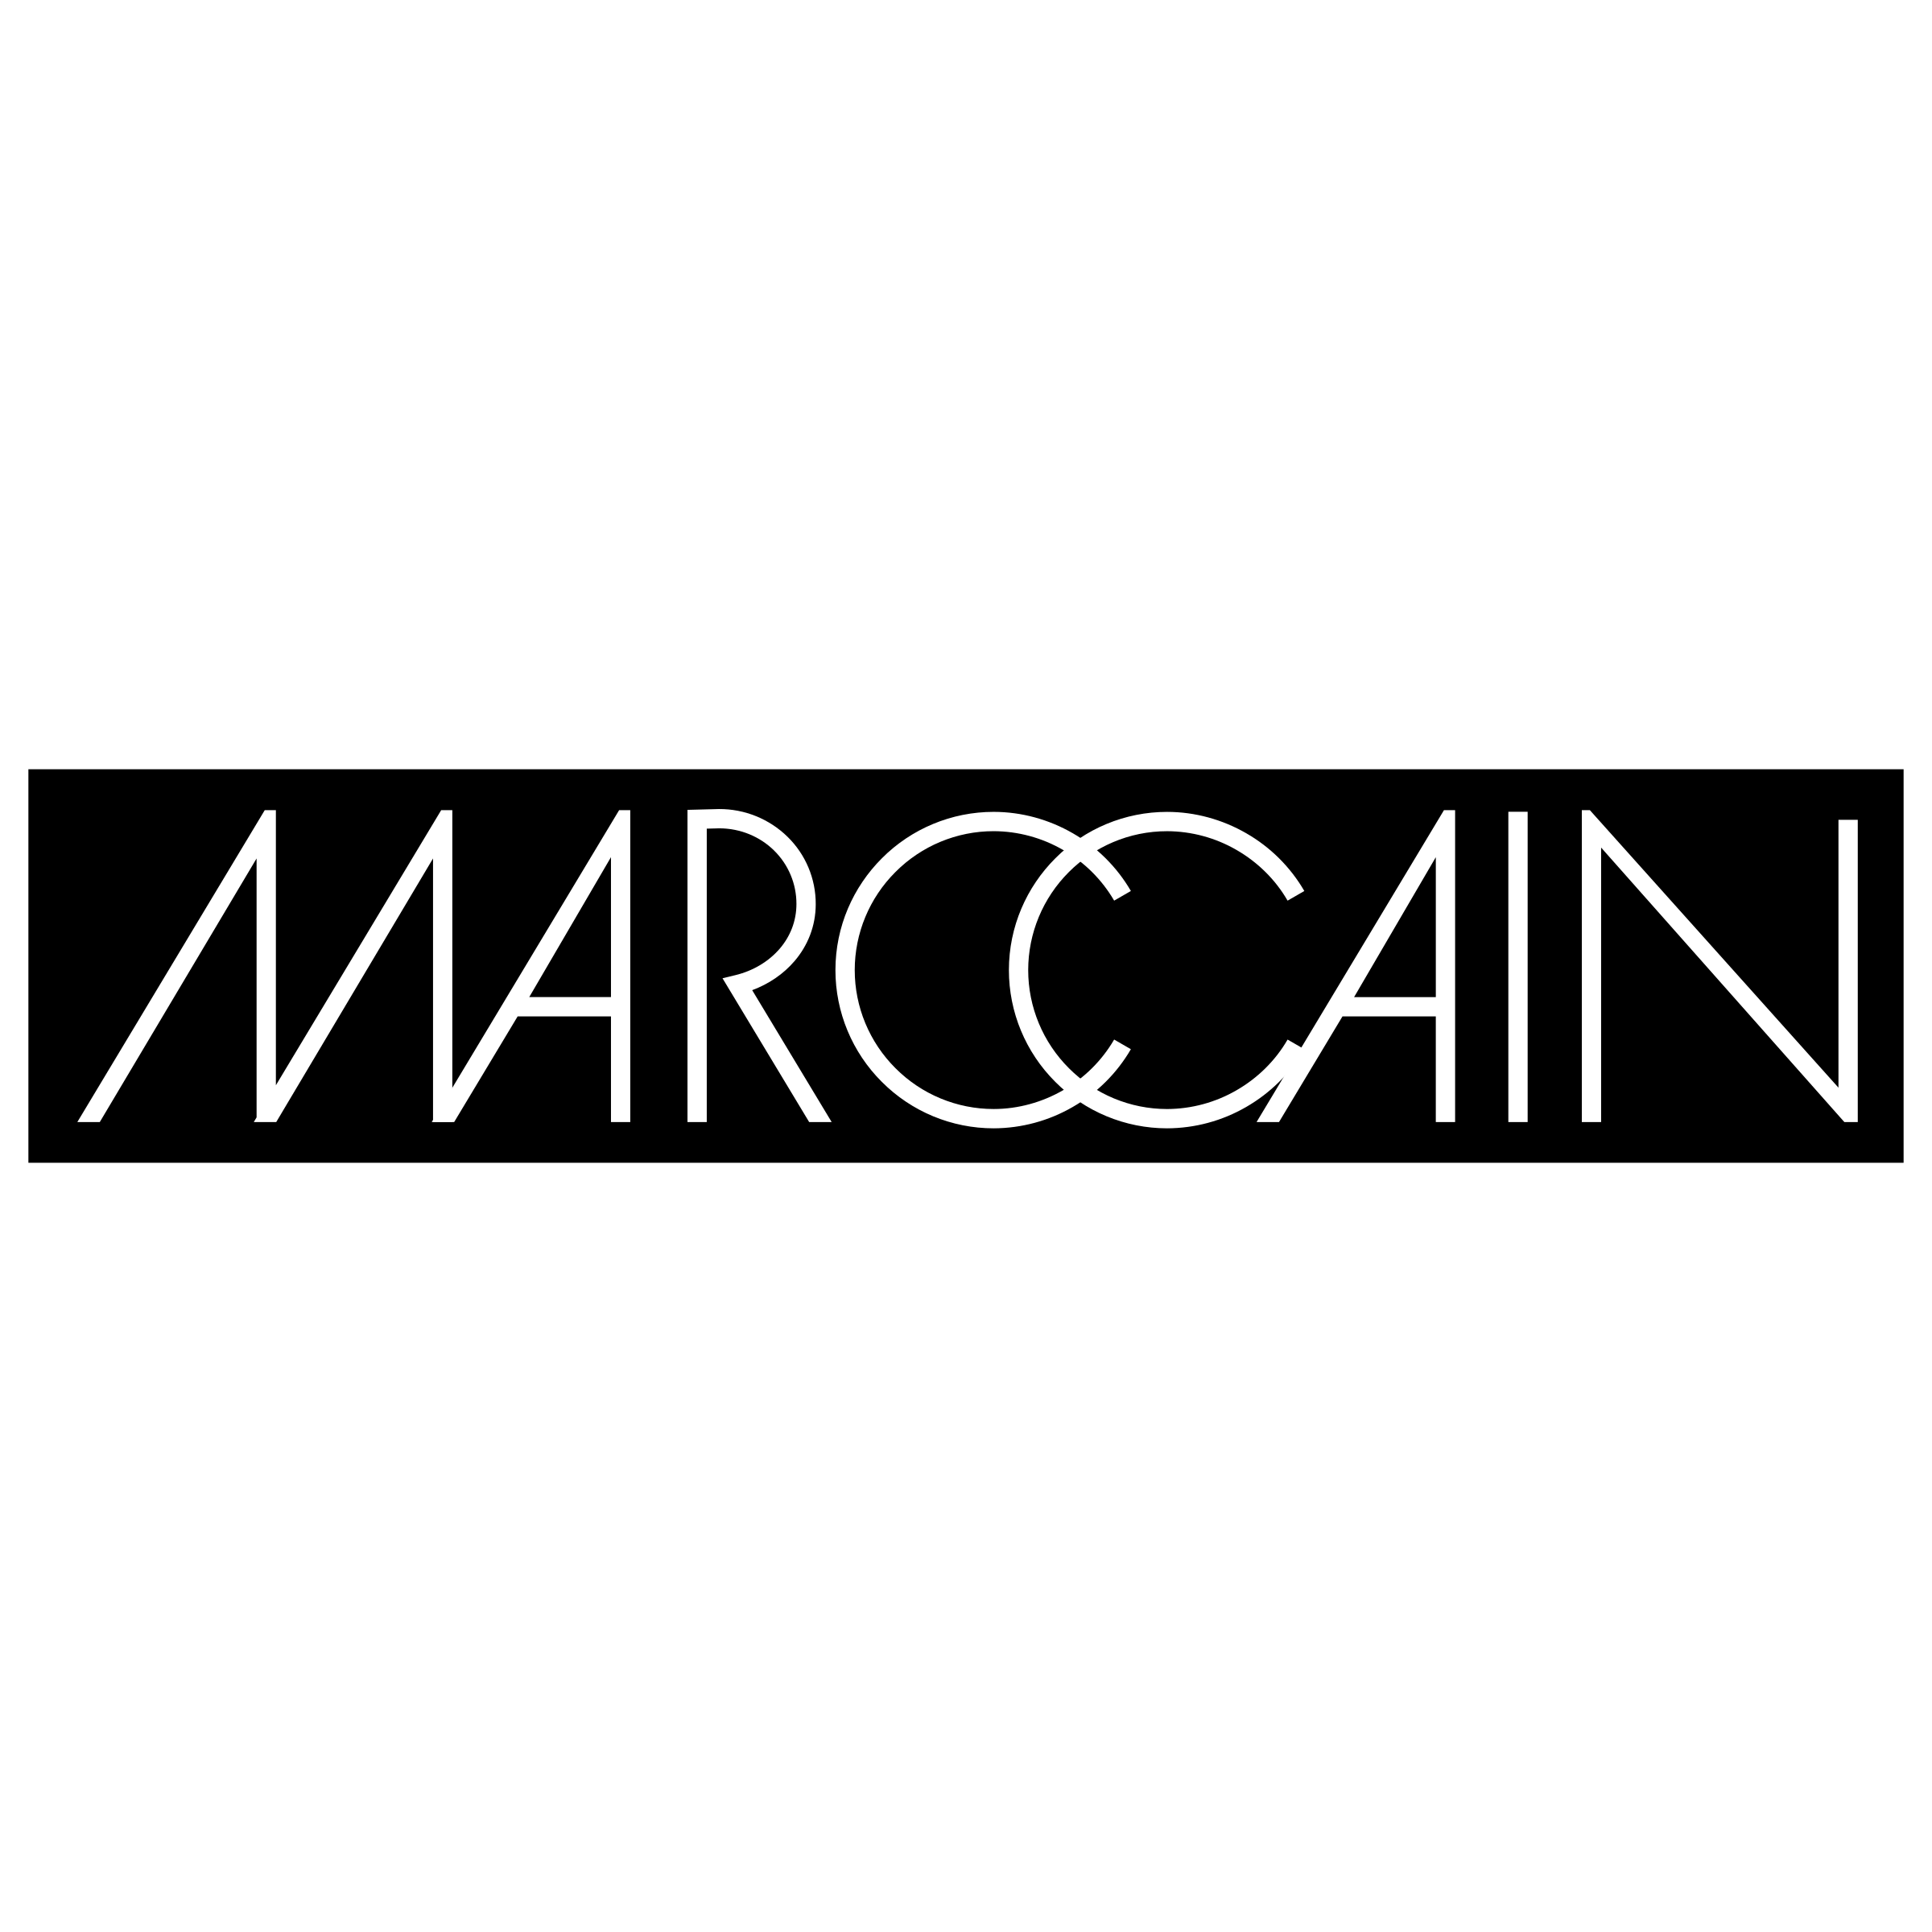 Marc Logo - Marc Cain Logo PNG Transparent & SVG Vector - Freebie Supply